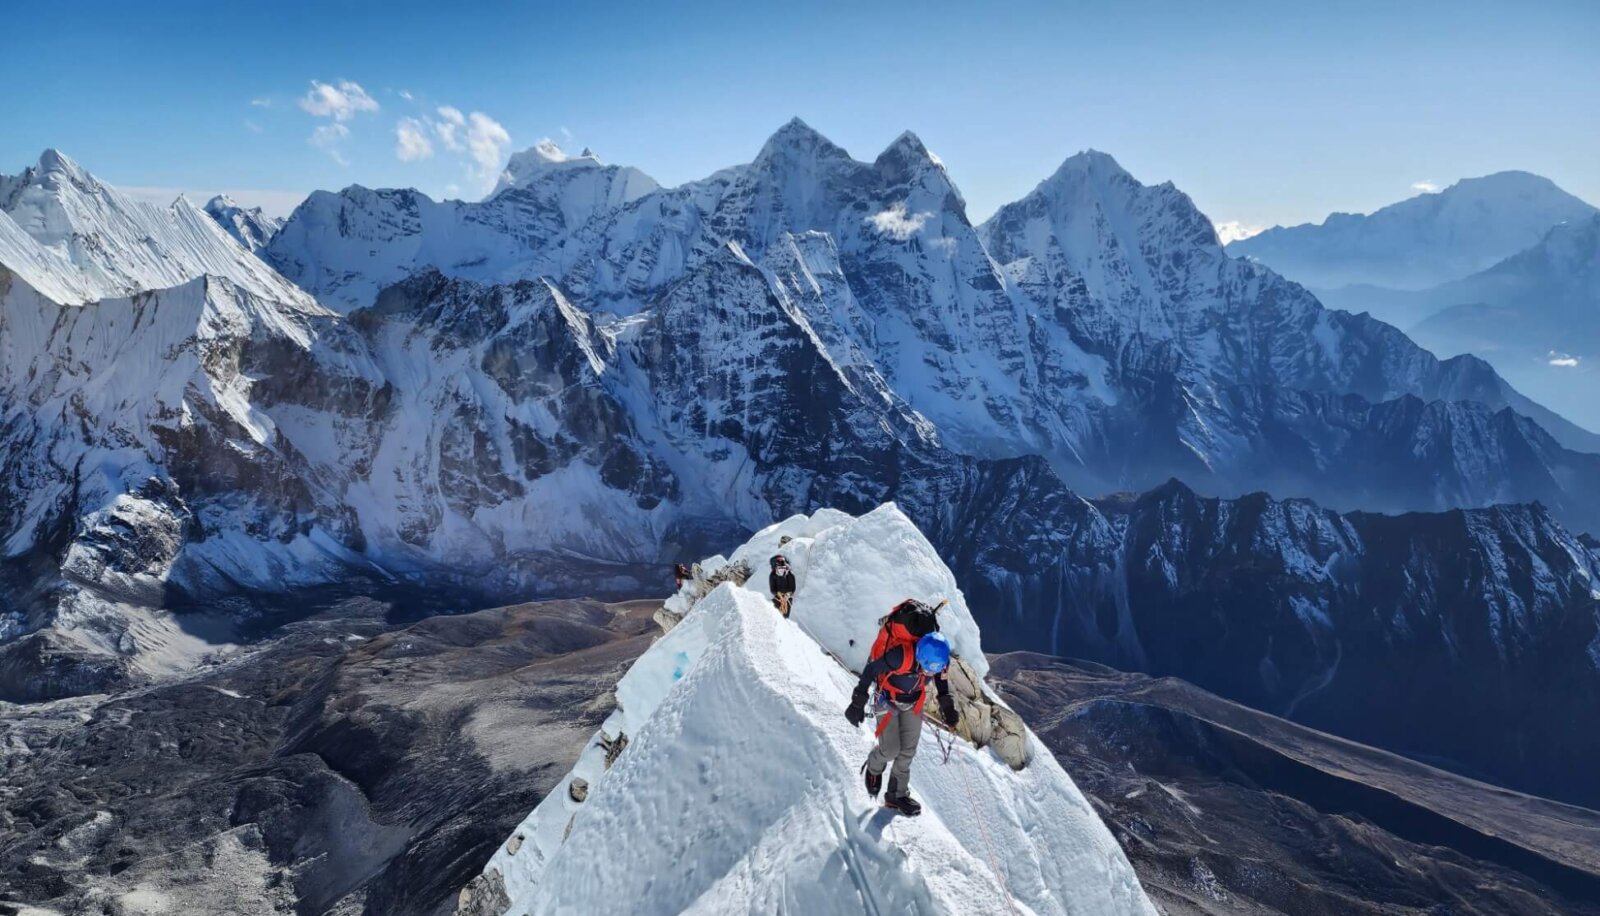 Climbers on the summit of Ama Dablam.